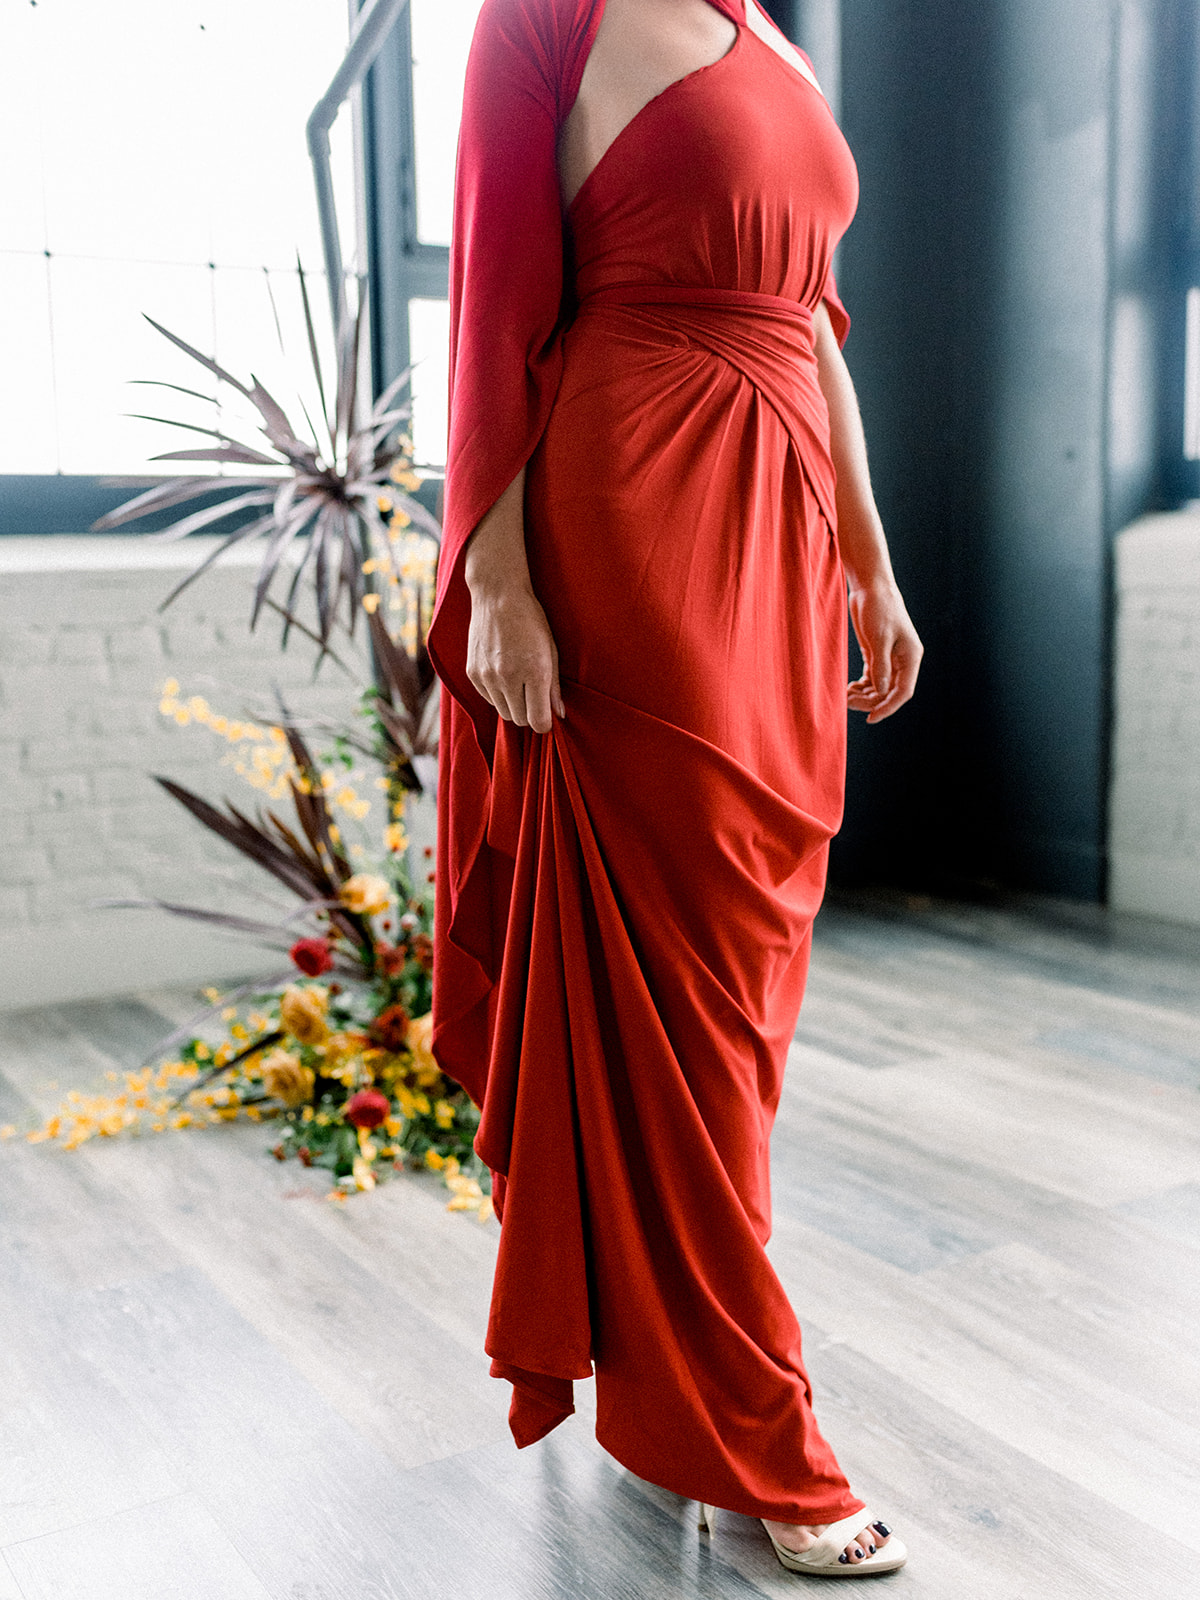 modern red dress